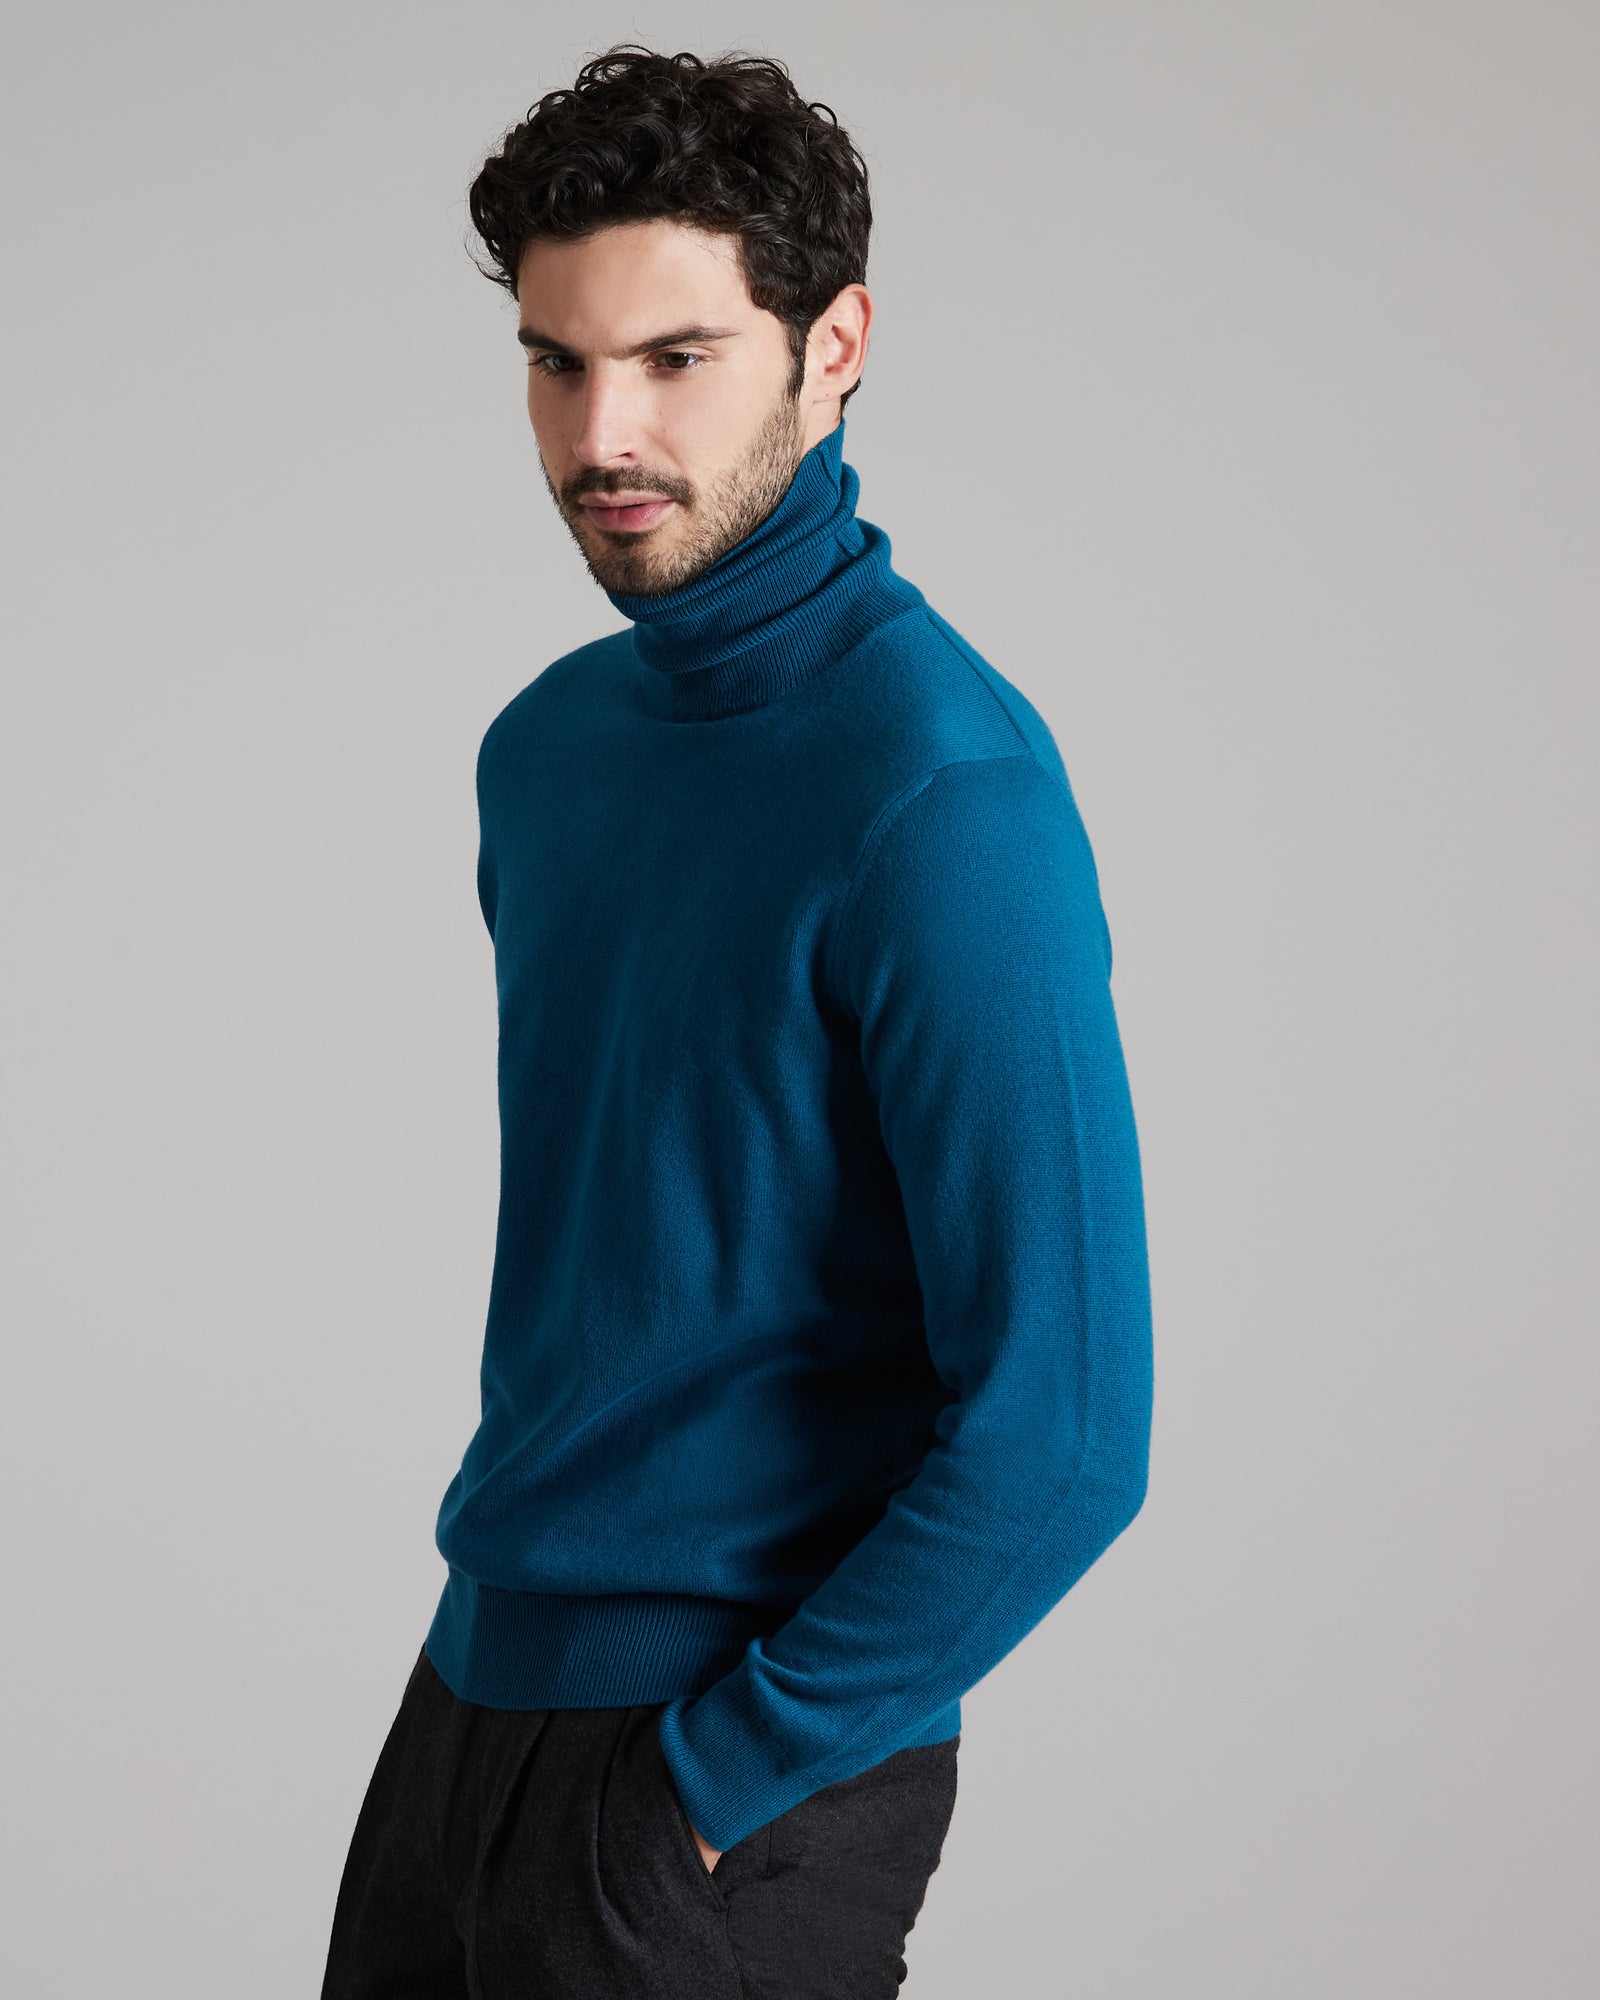 Cobalt blue Kid Cashmere turtleneck sweater